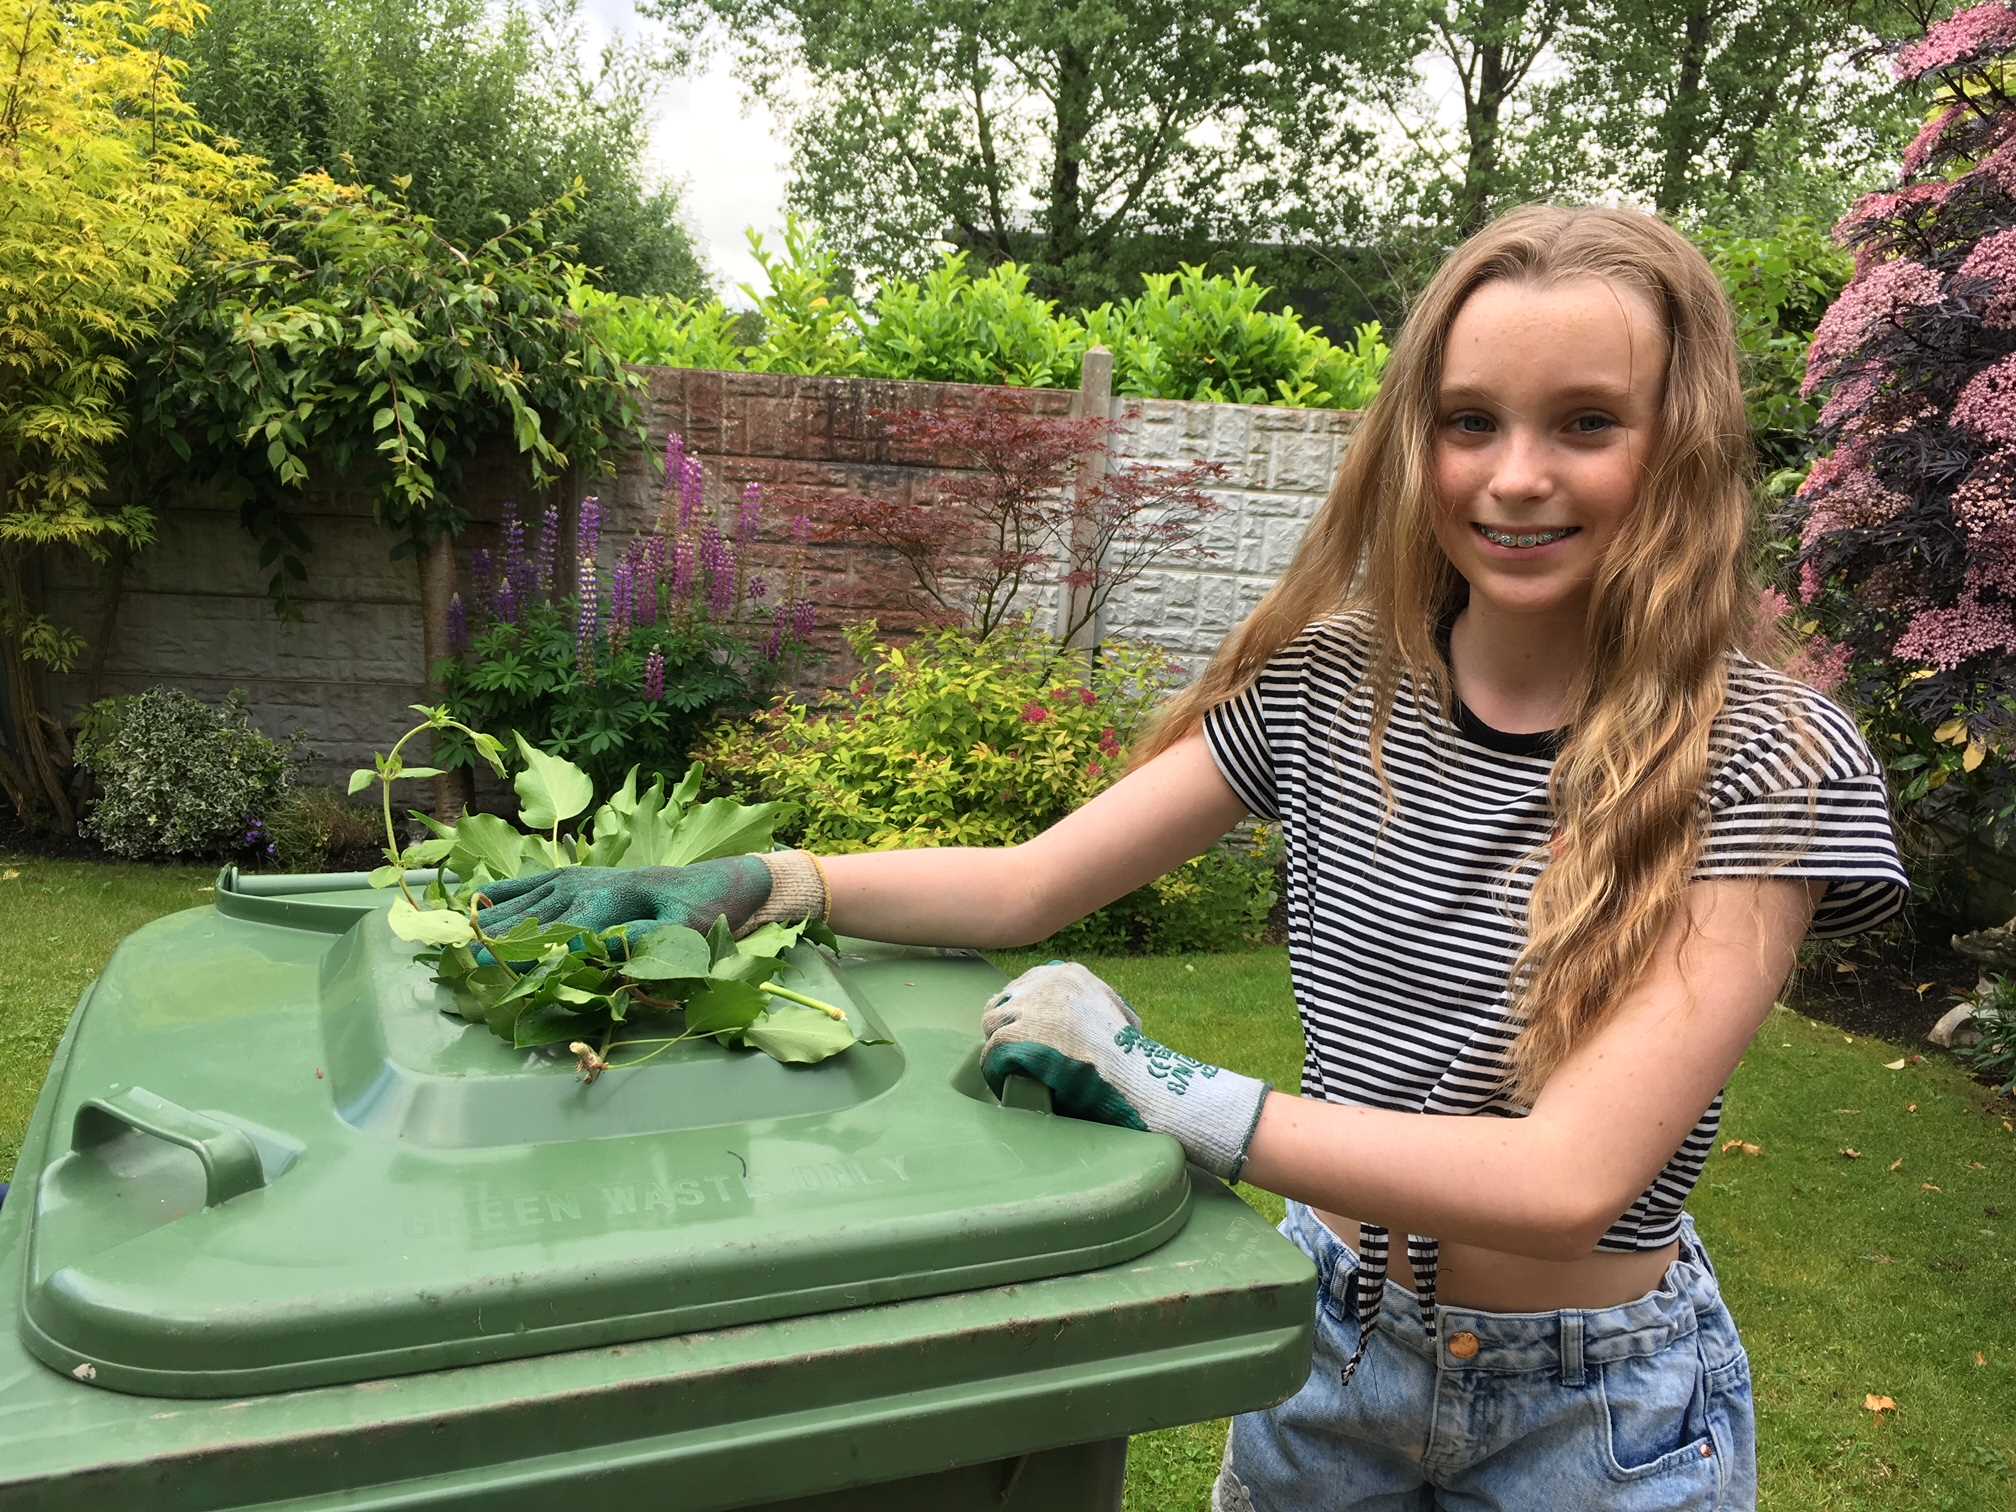 Young gardener with her green bin.